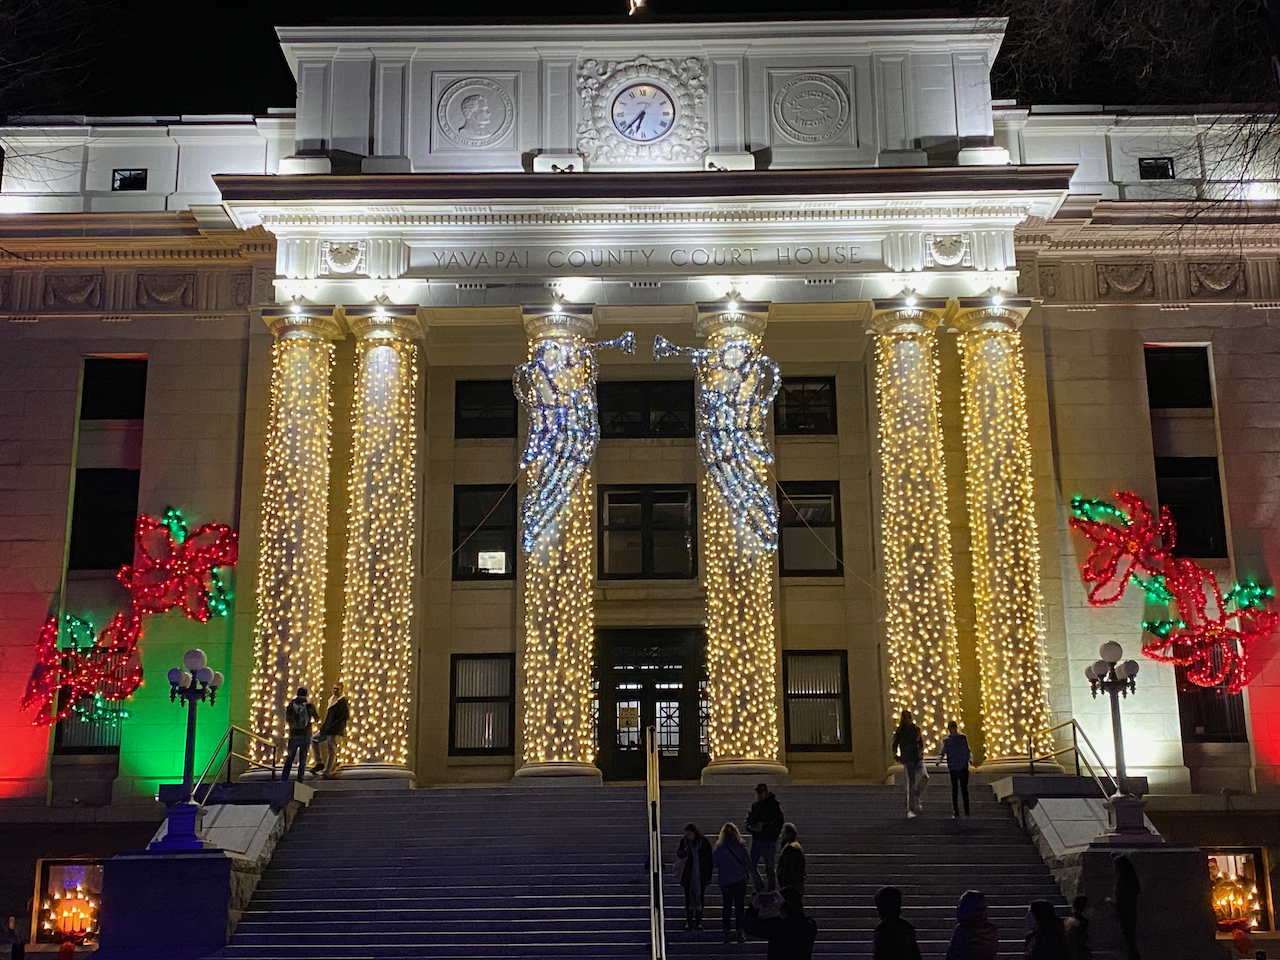 Prescott Courthouse Christmas Lights